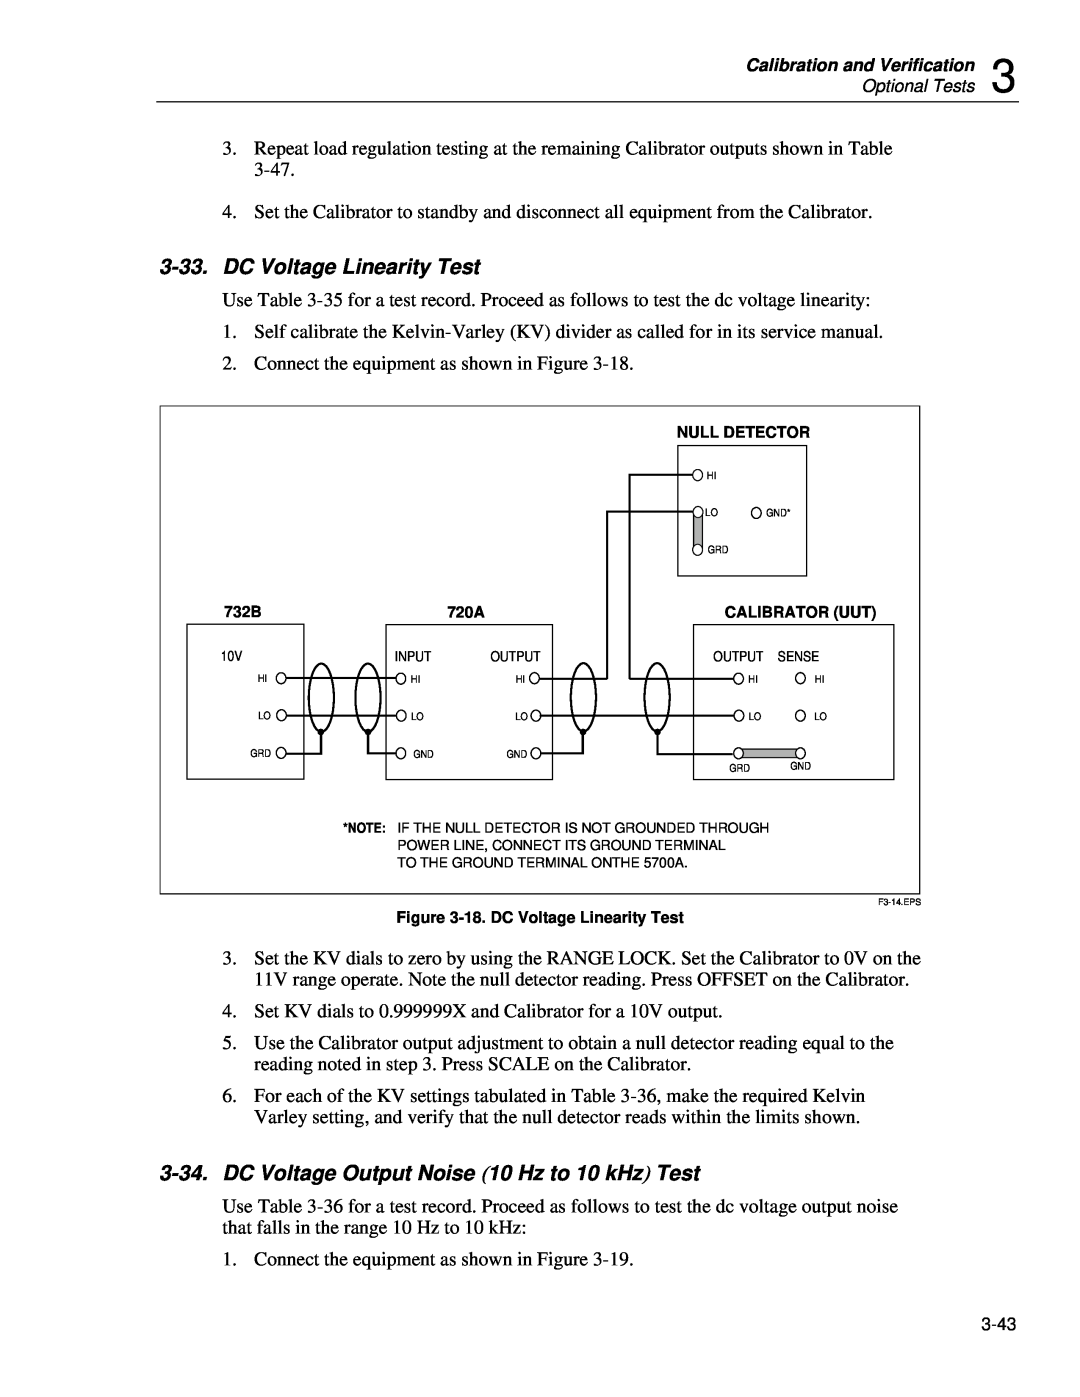 Fluke 5720A service manual DC Voltage Linearity Test, DC Voltage Output Noise 10 Hz to 10 kHz Test, Optional Tests 